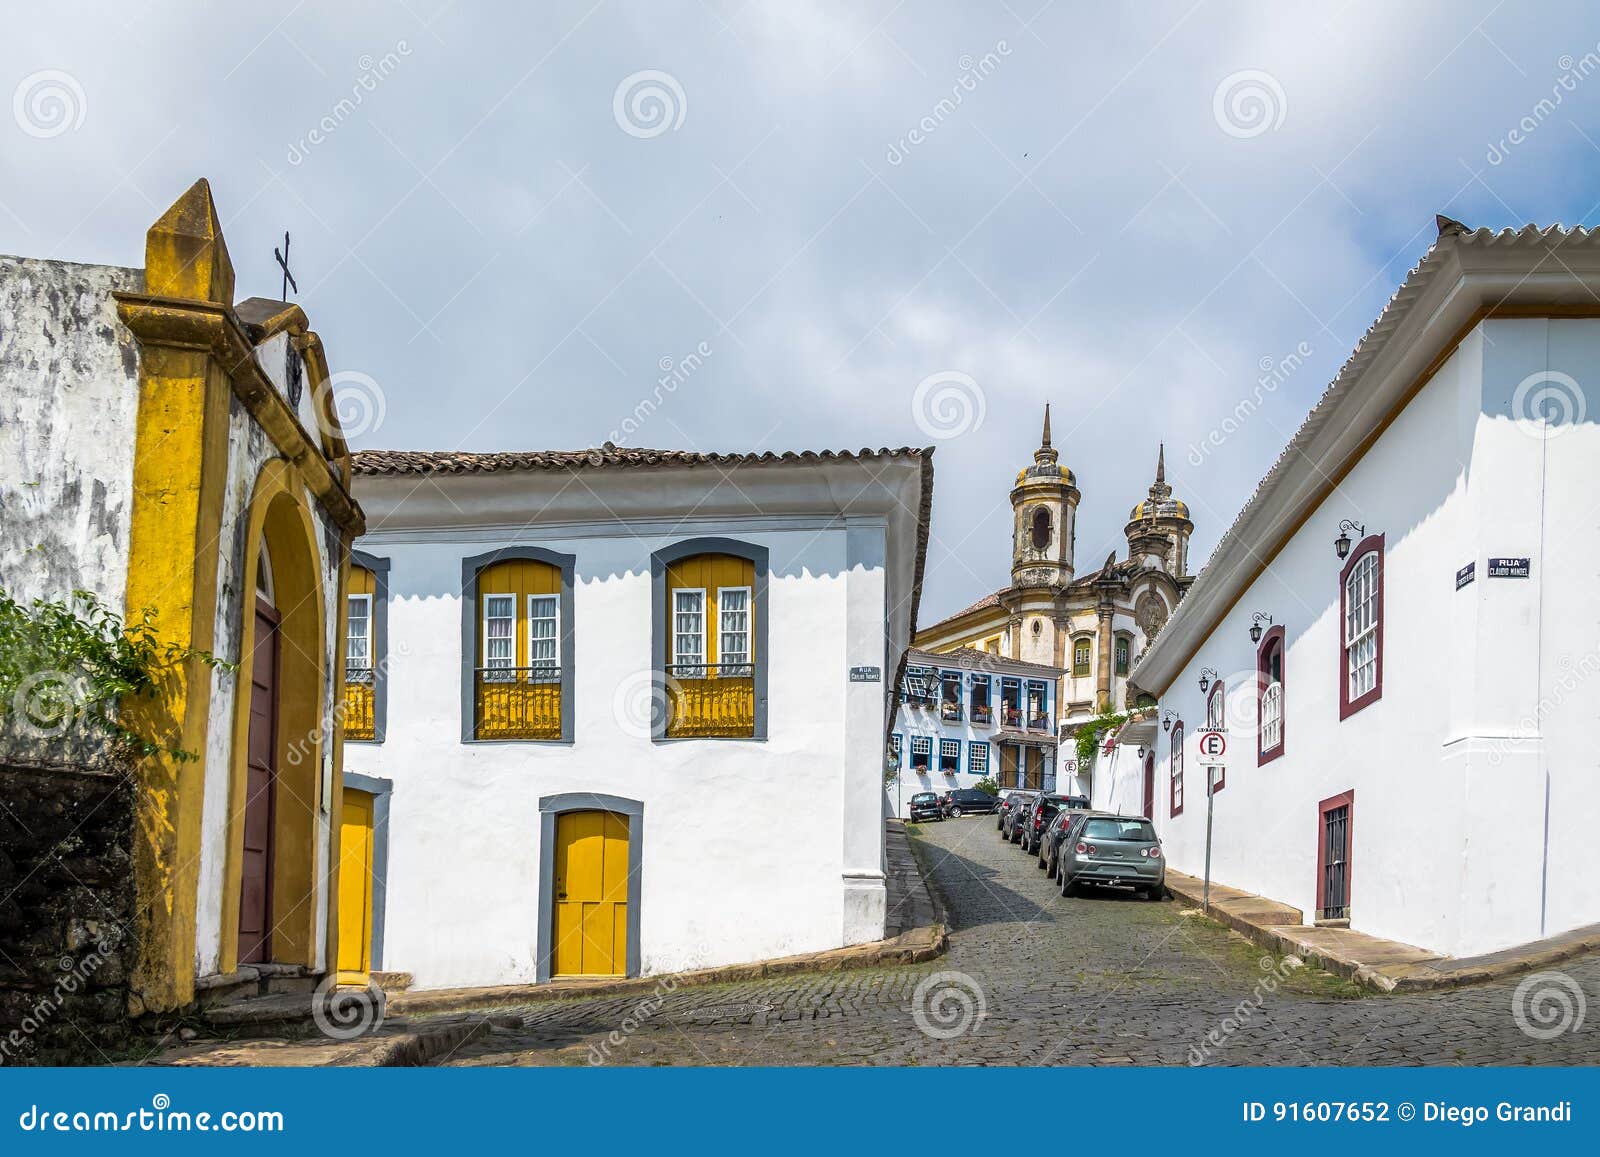 street in ouro preto city with sao francisco de assis church on backgound - ouro preto, minas gerais, brazil